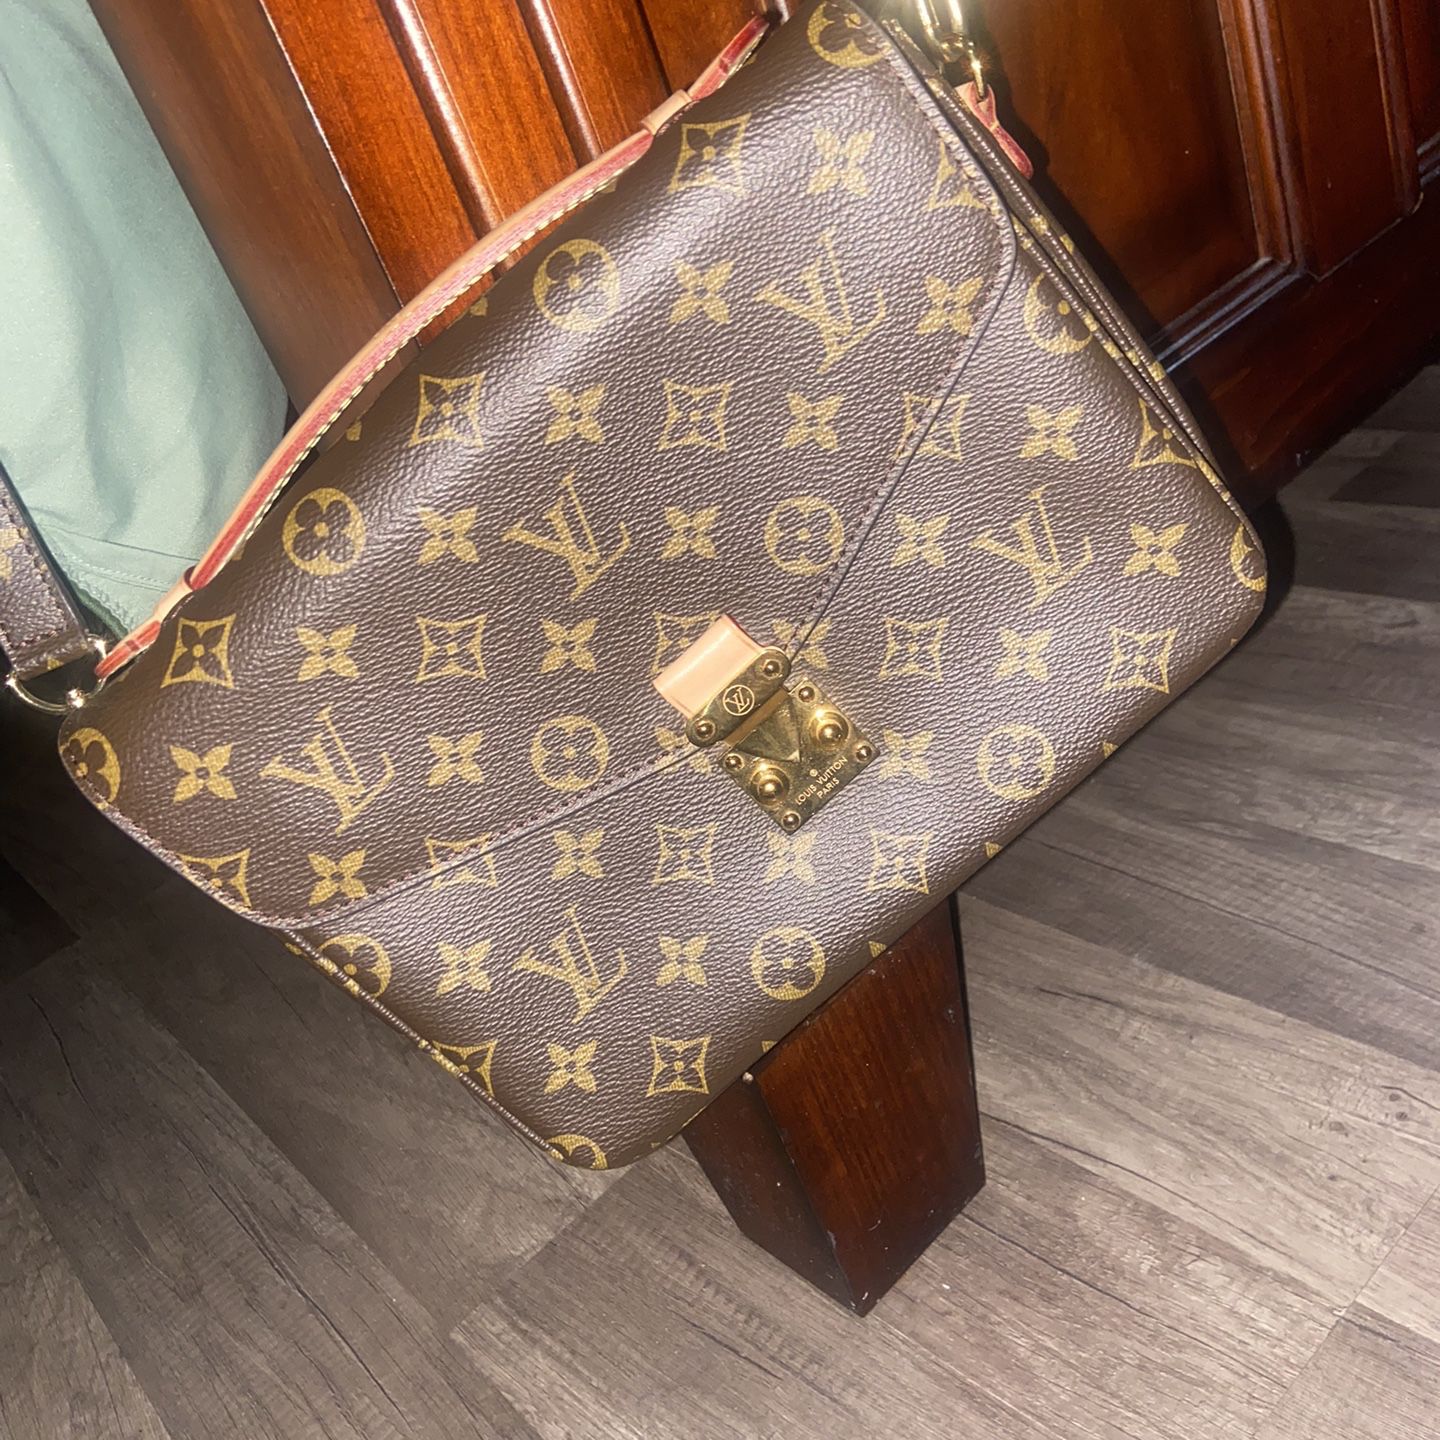 Louis Vuitton Bag #61930-1 for Sale in Mesa, AZ - OfferUp